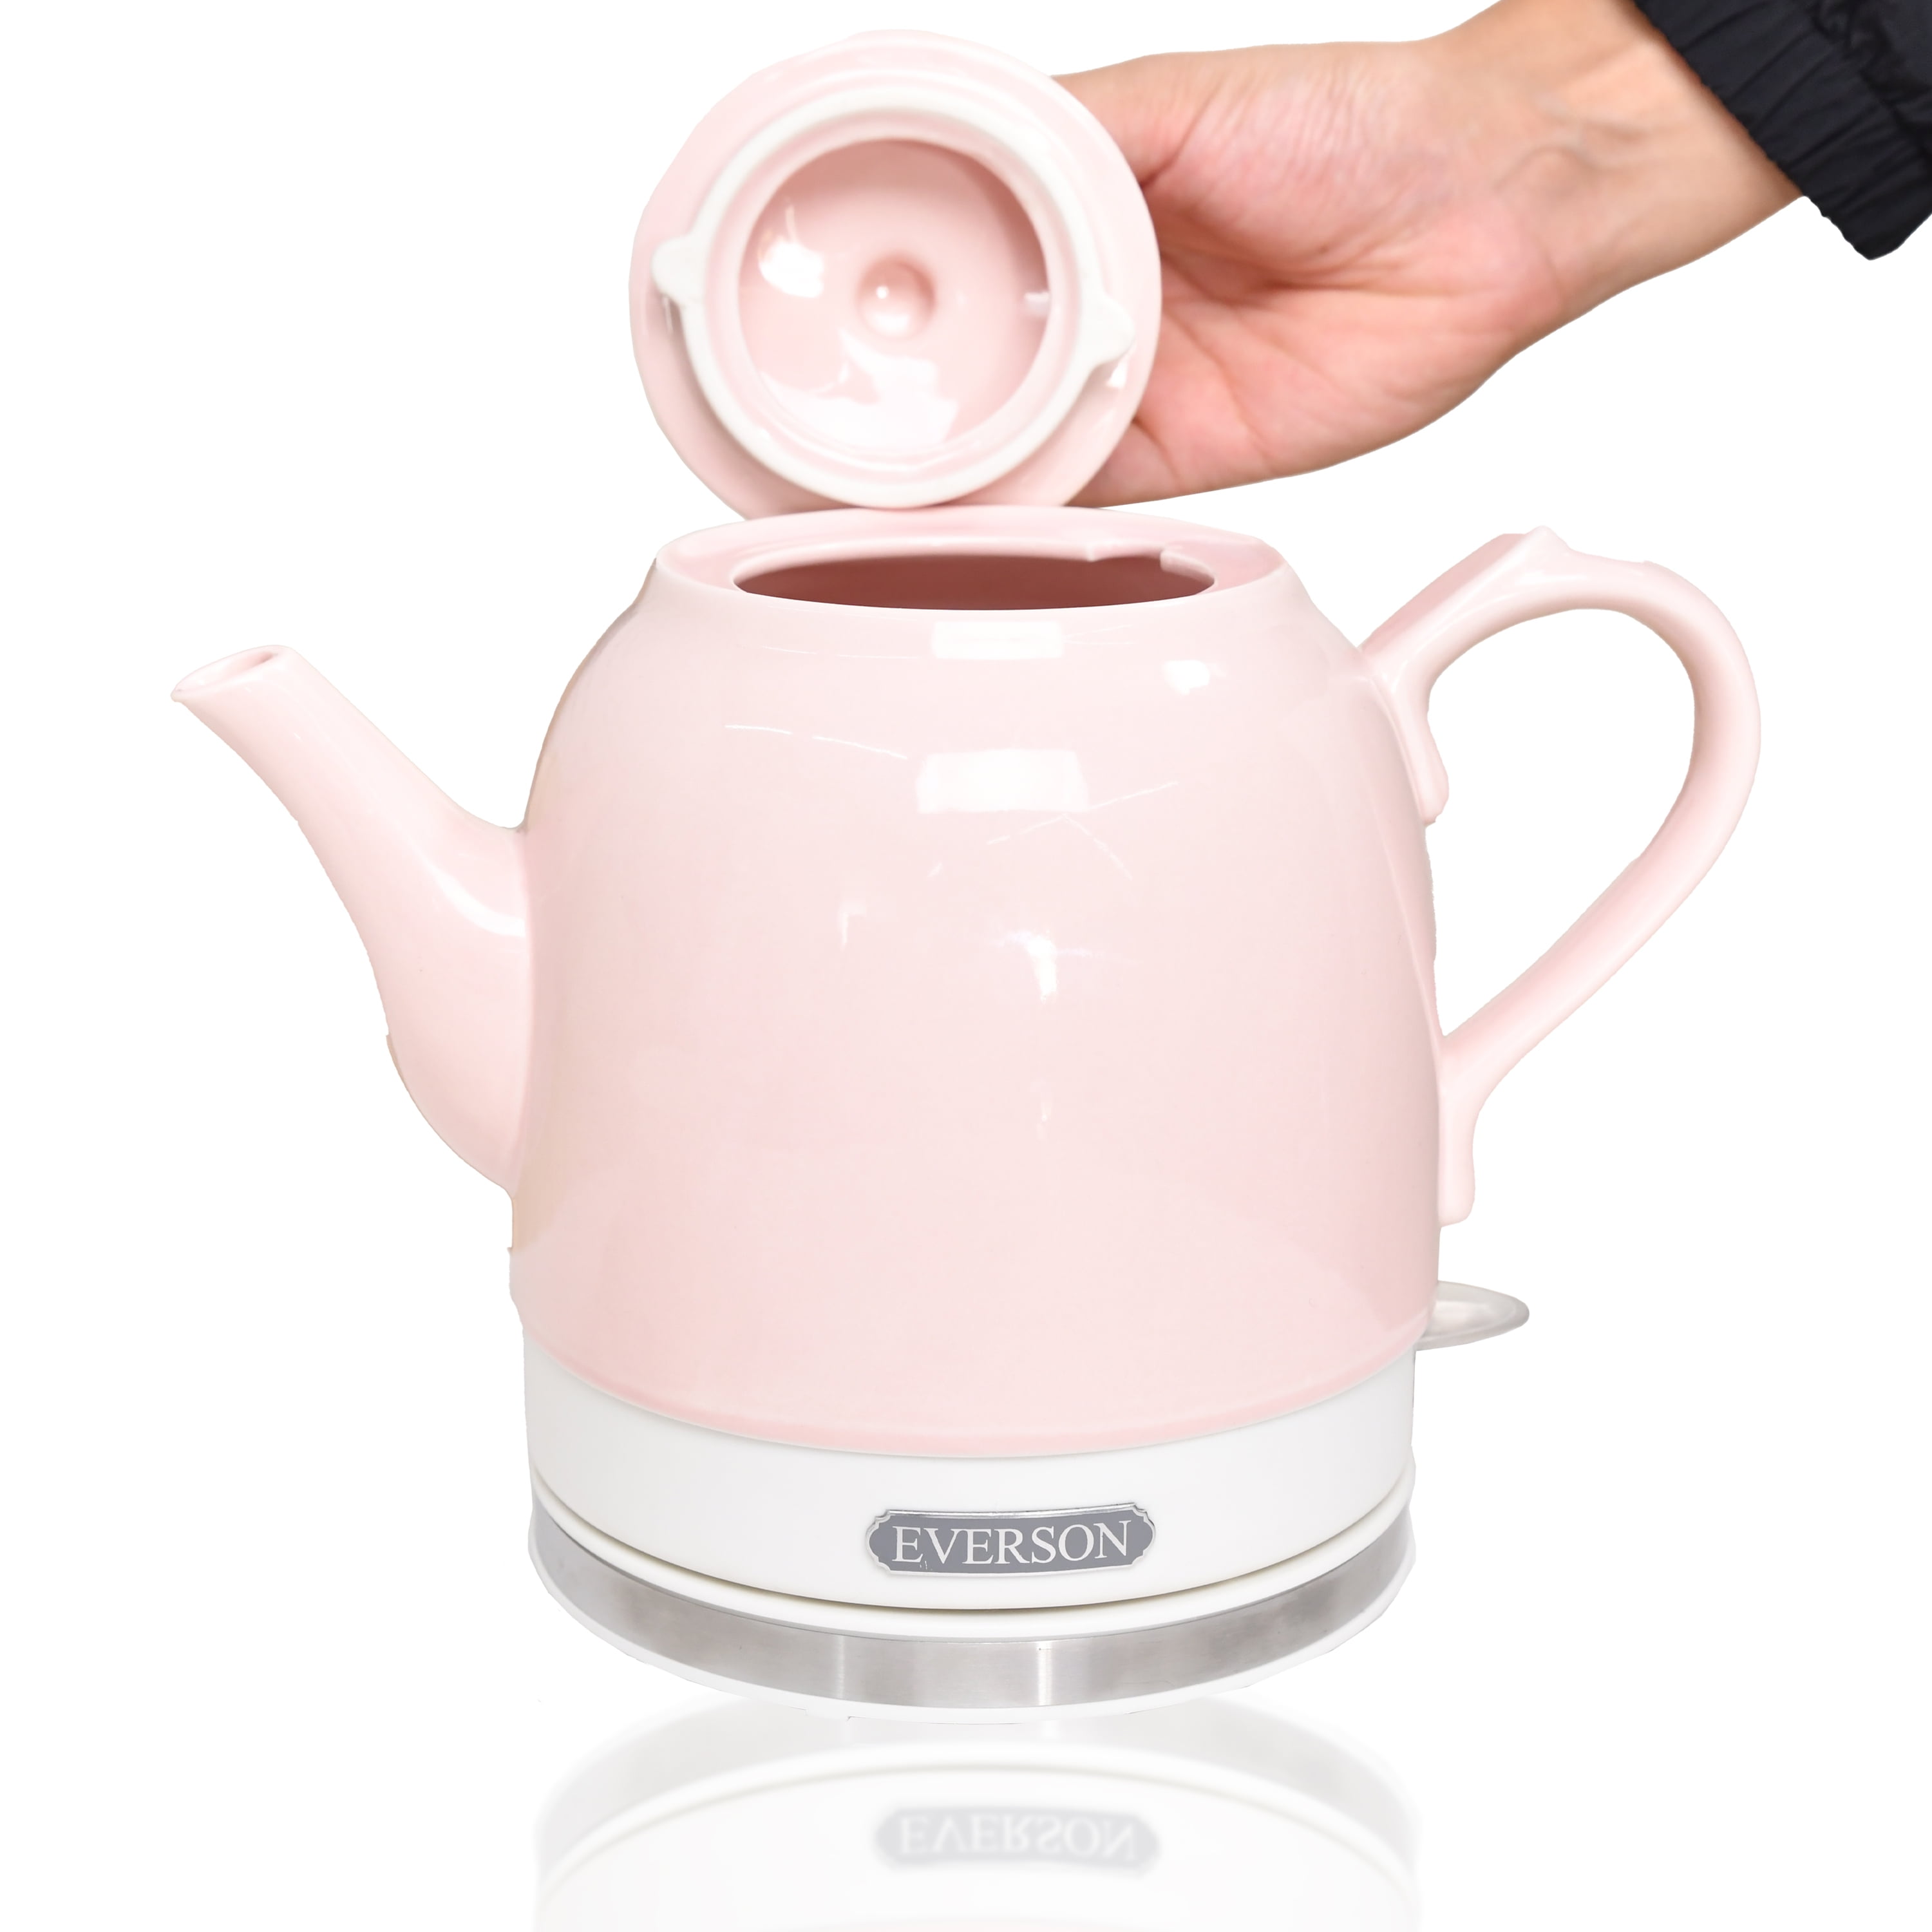 Everson 1.5L Electric Kettle. 100% Ceramic Pink Electric Tea